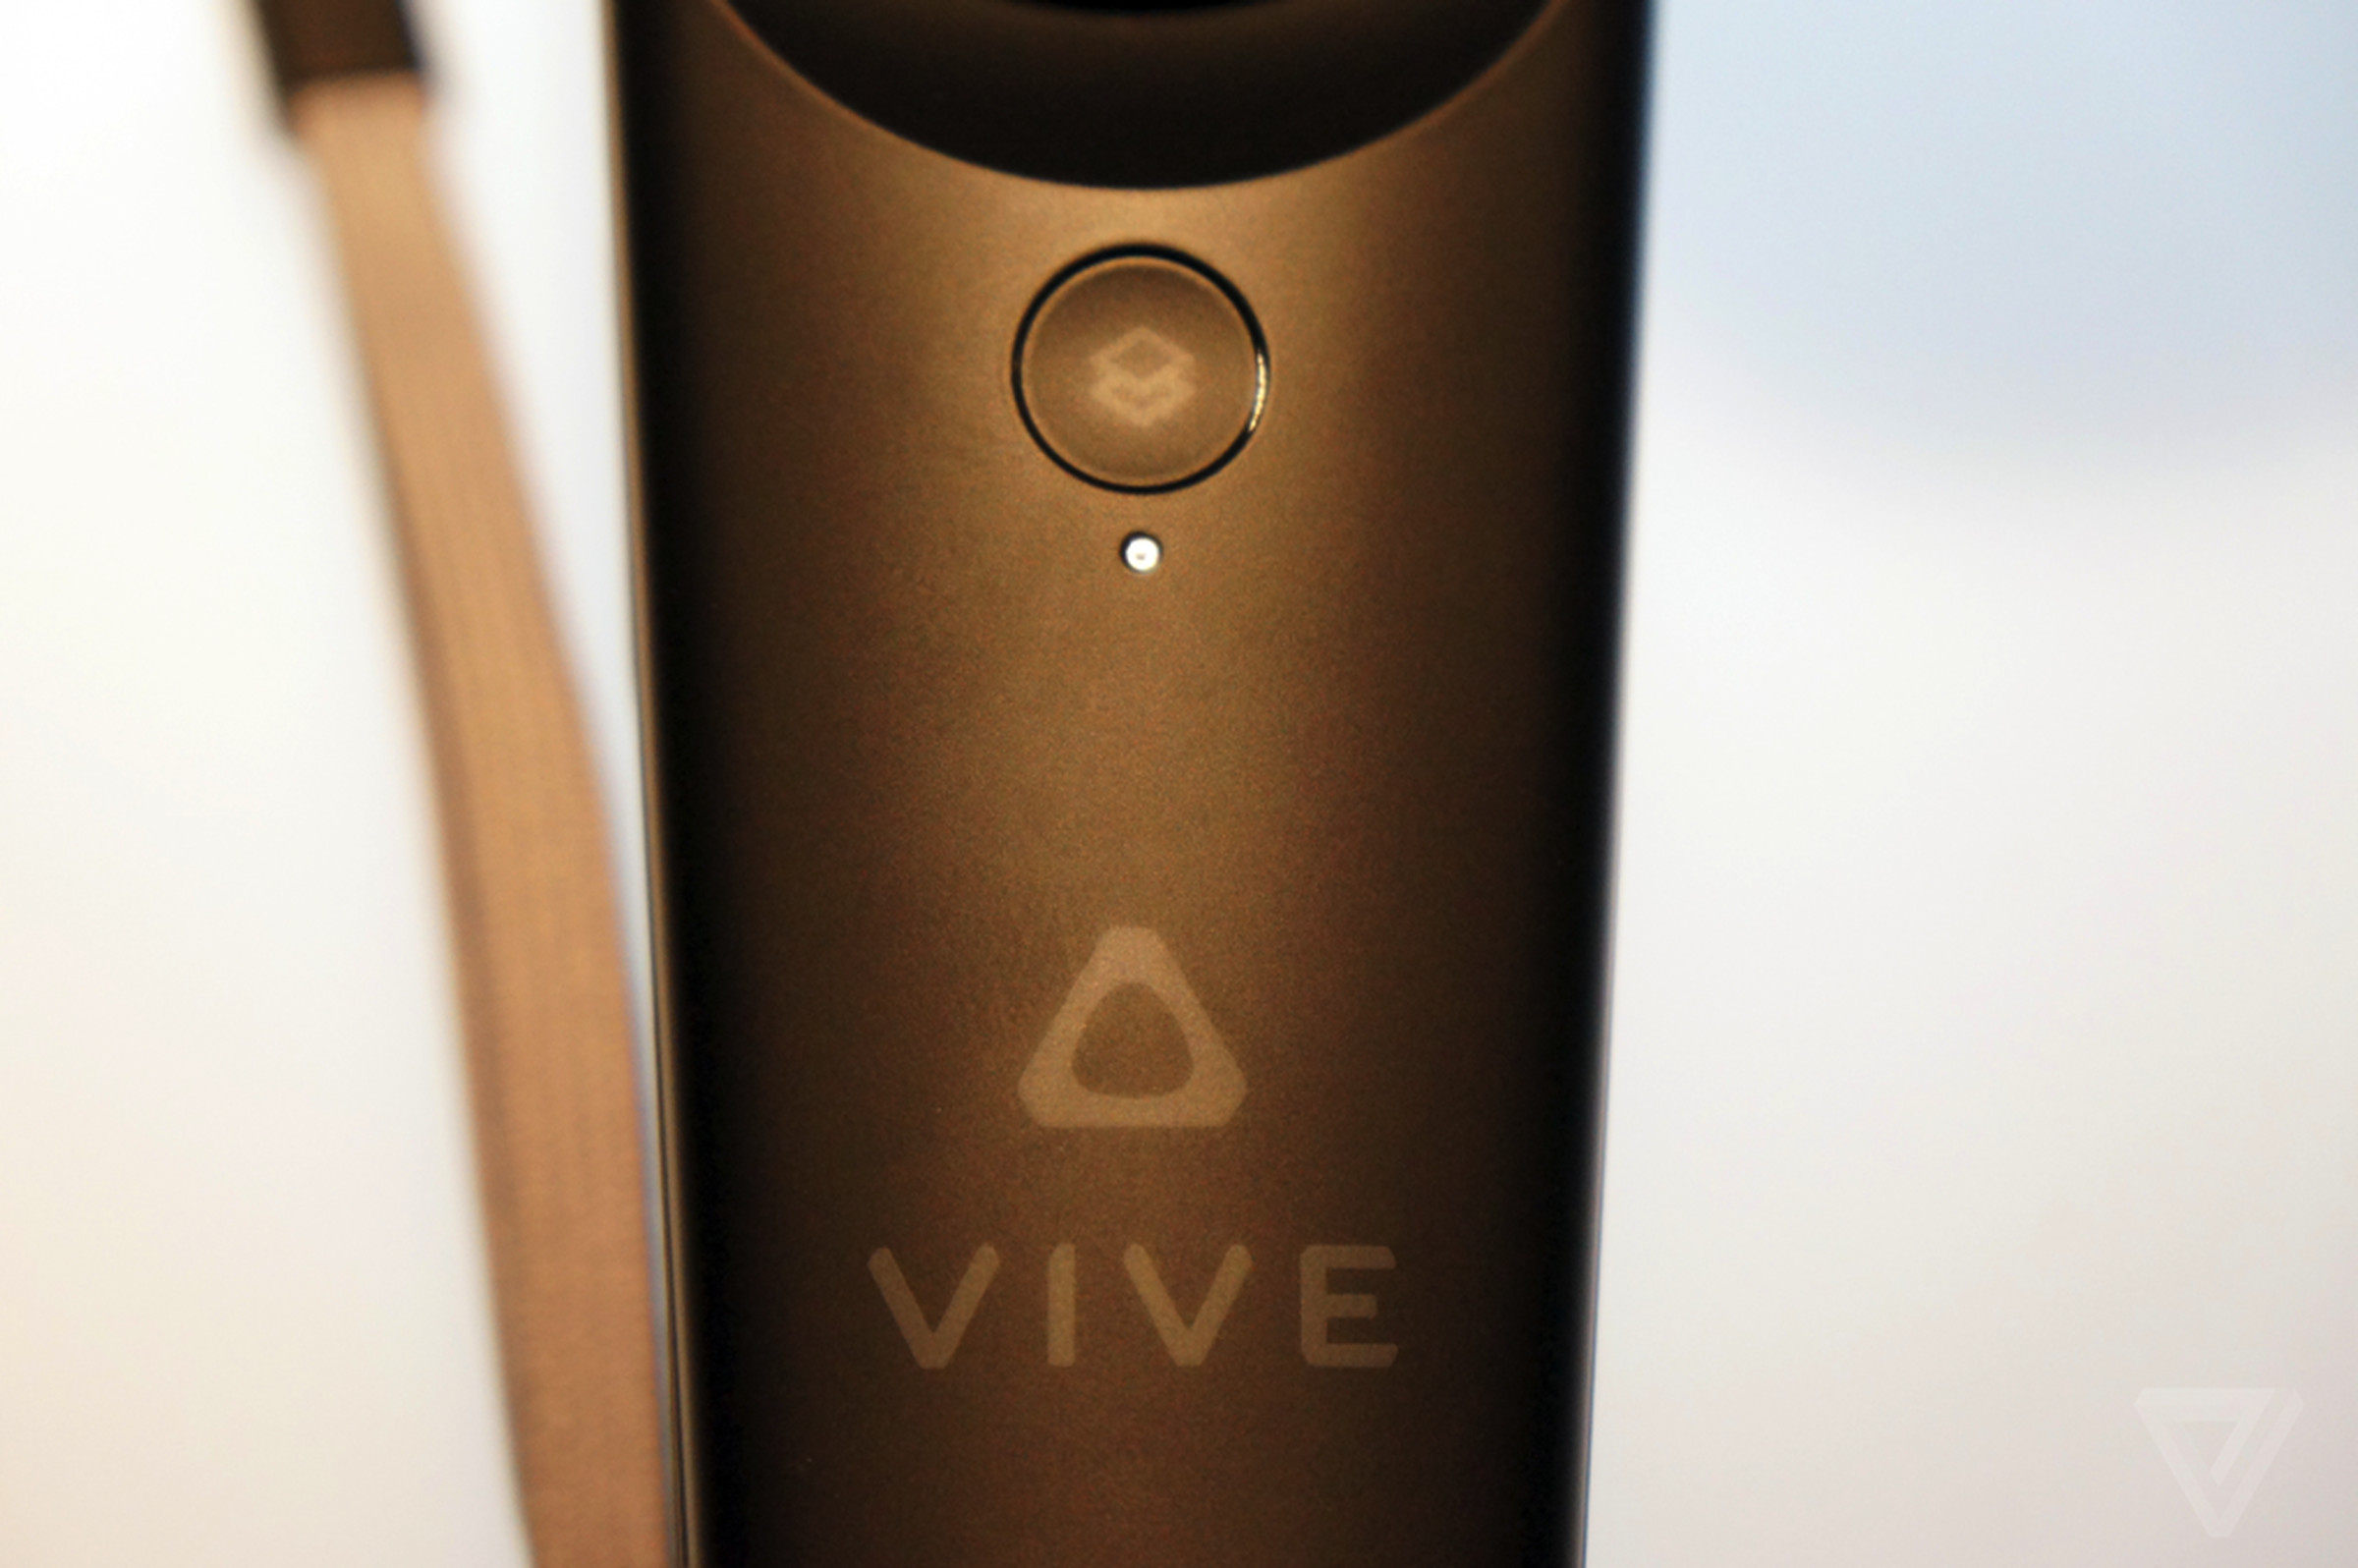 HTC Vive consumer edition